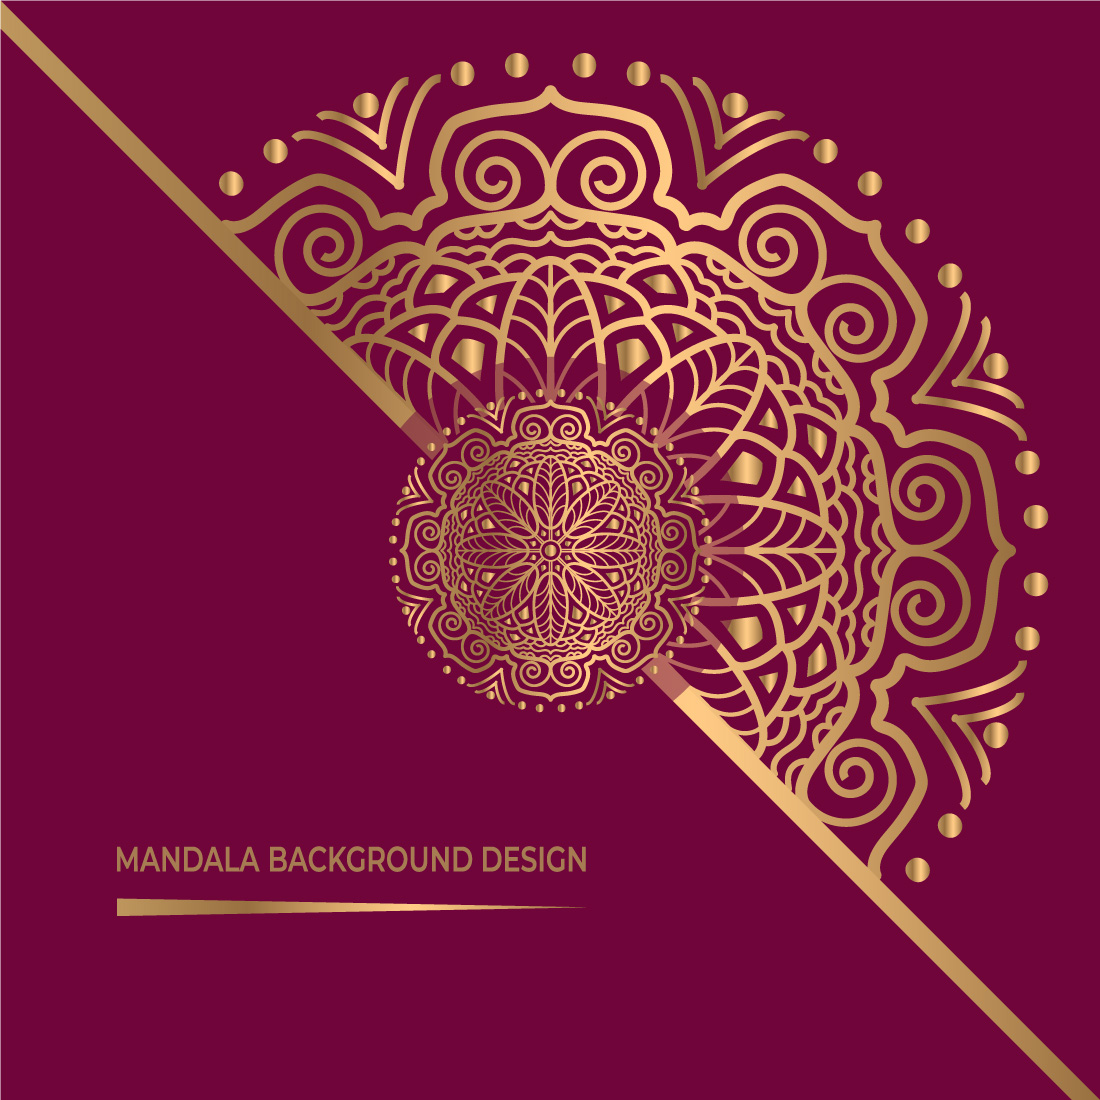 02, Mandala background design preview image.